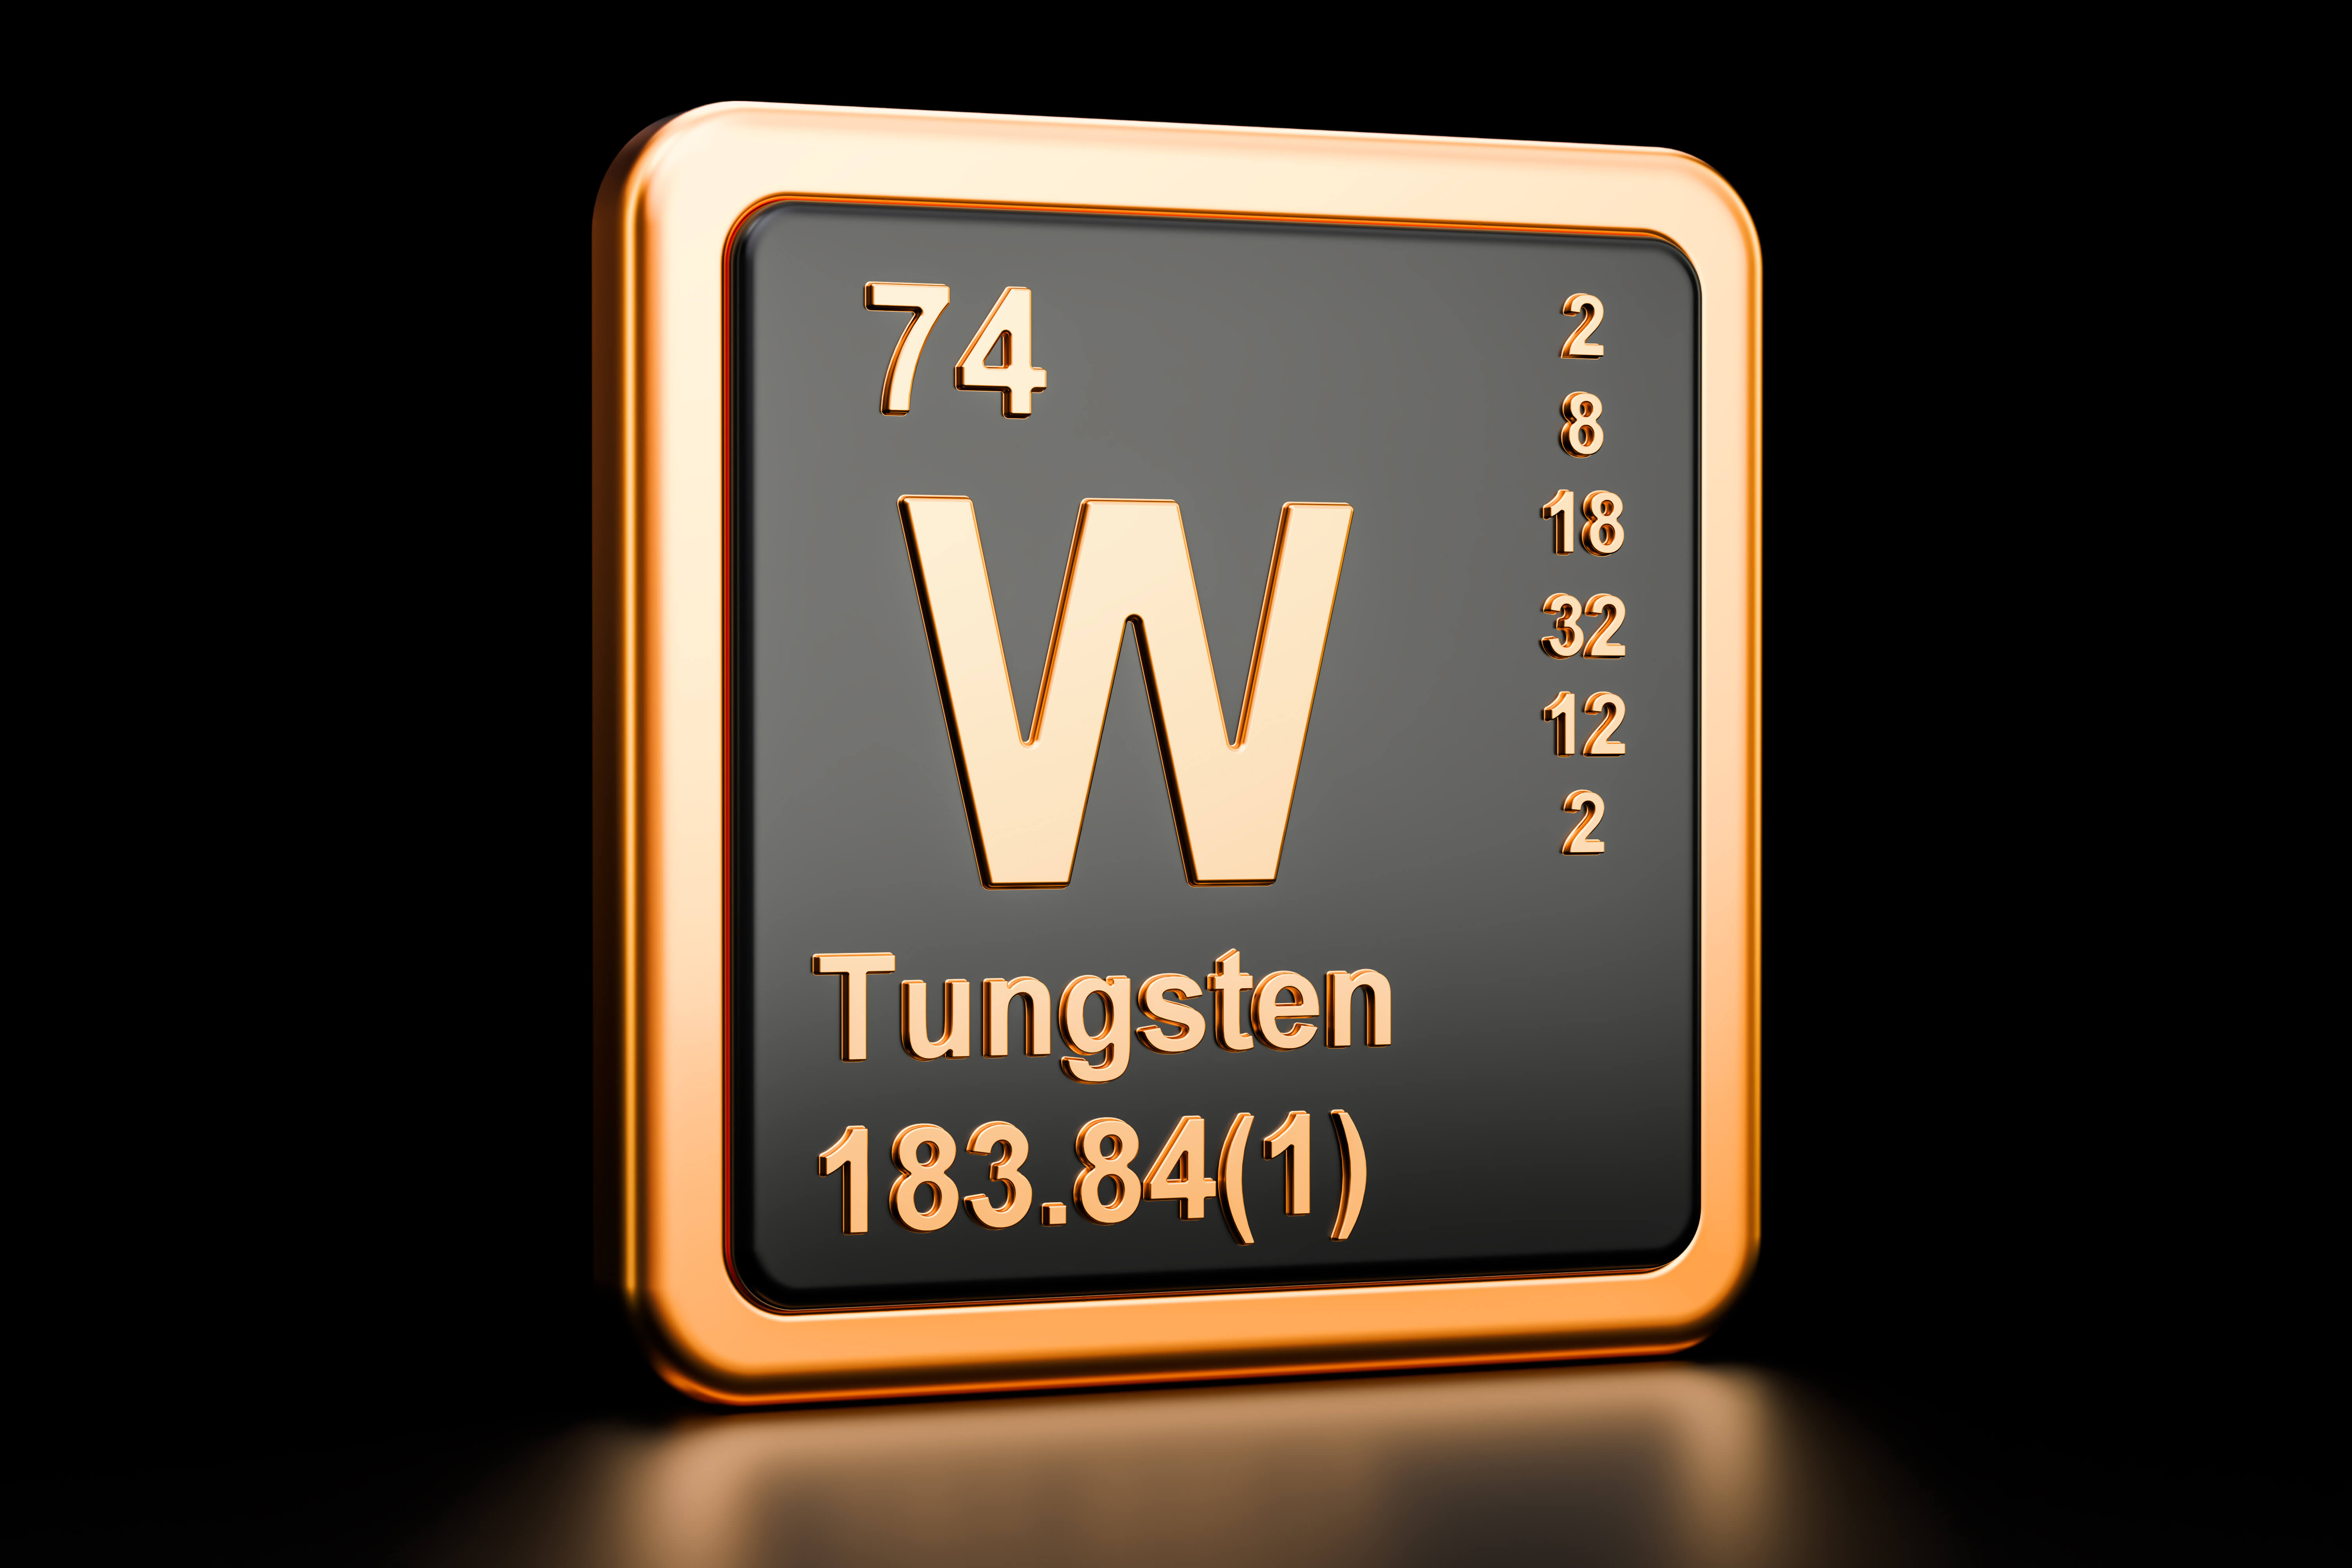 Where is tungsten found? Special Metals